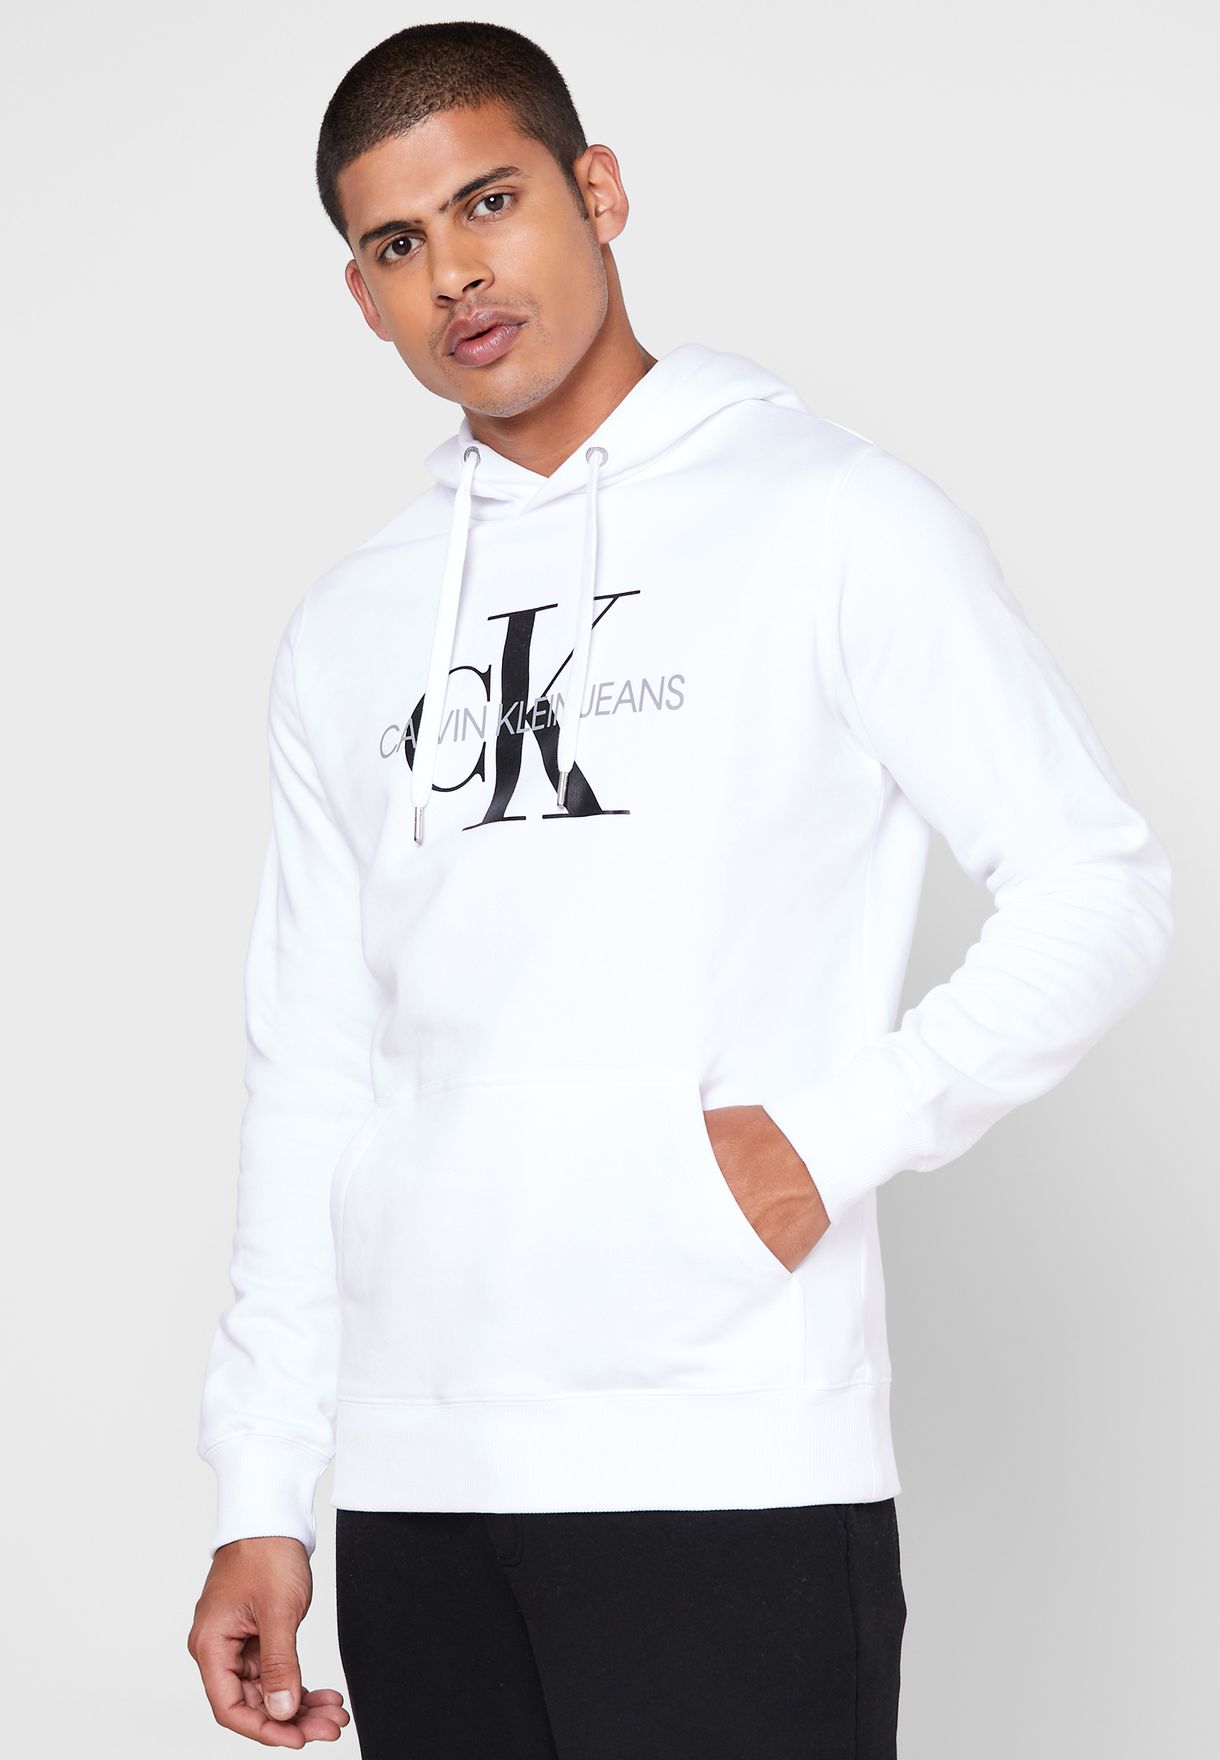 Conserveermiddel Carrière Signaal White Hoodie Calvin Klein Online Sale, UP TO 50% OFF